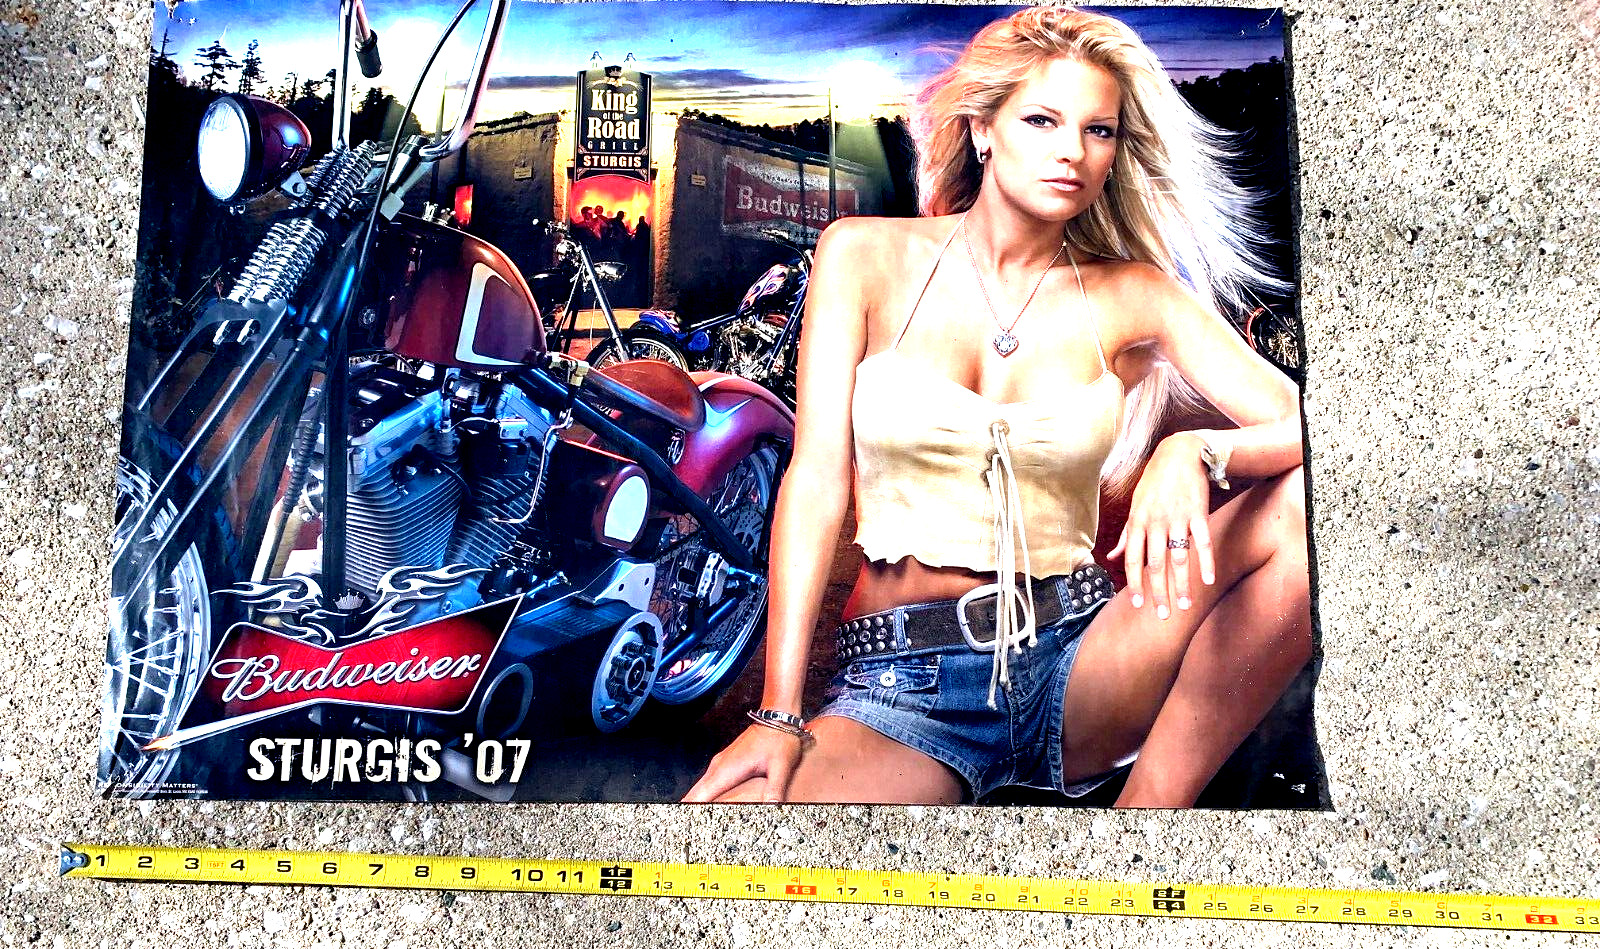 Sturgis Budweiser Beer Biker Poster 2007